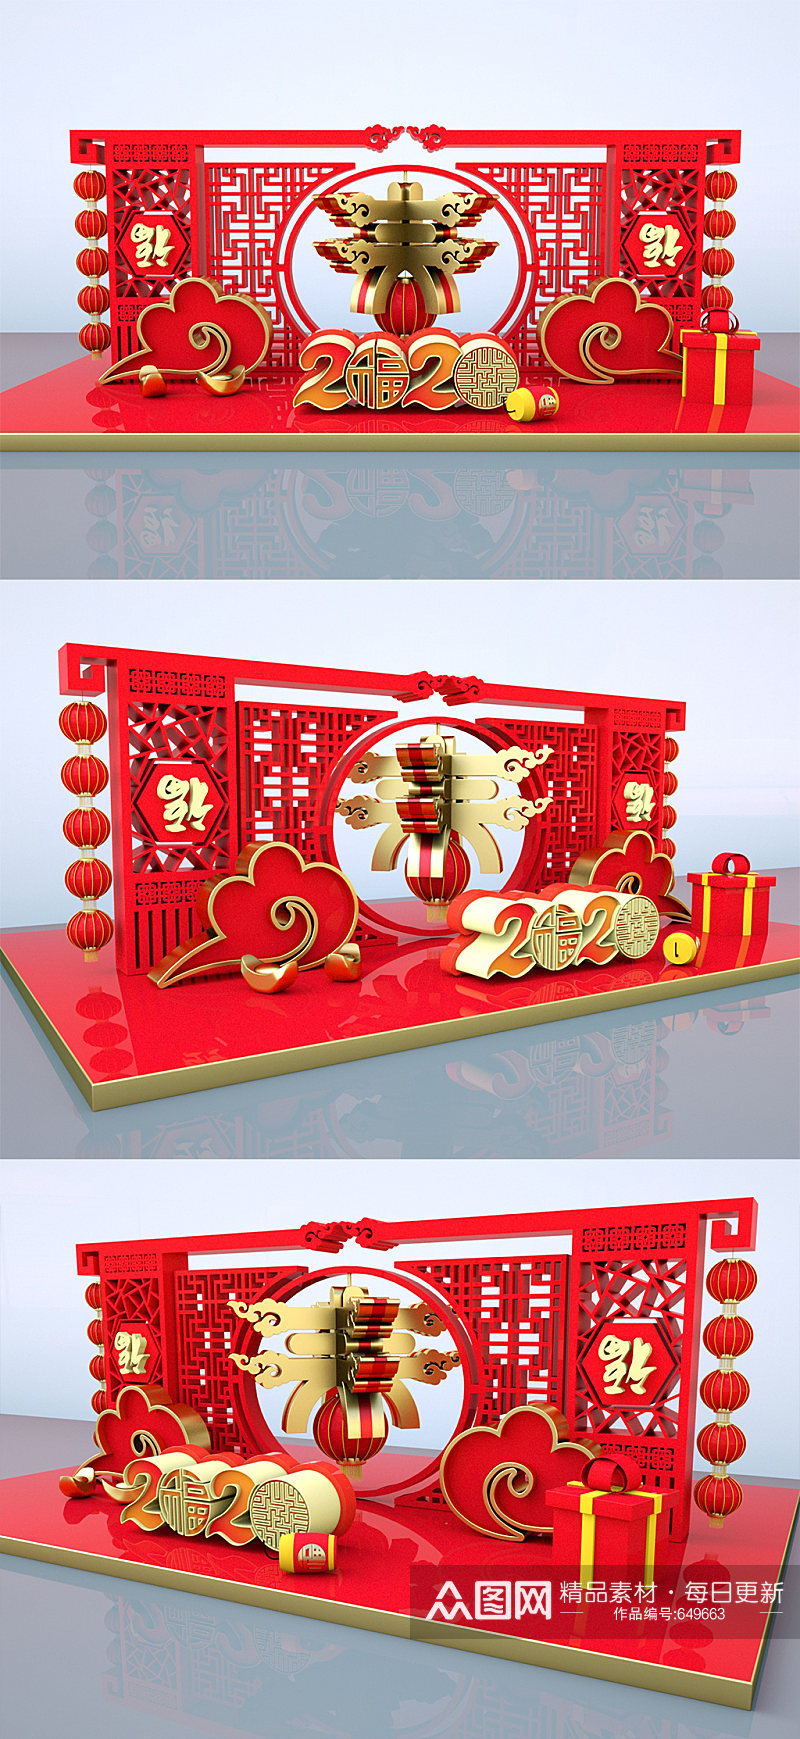 C4D喜庆中国风新春食堂新年美陈设计布置素材